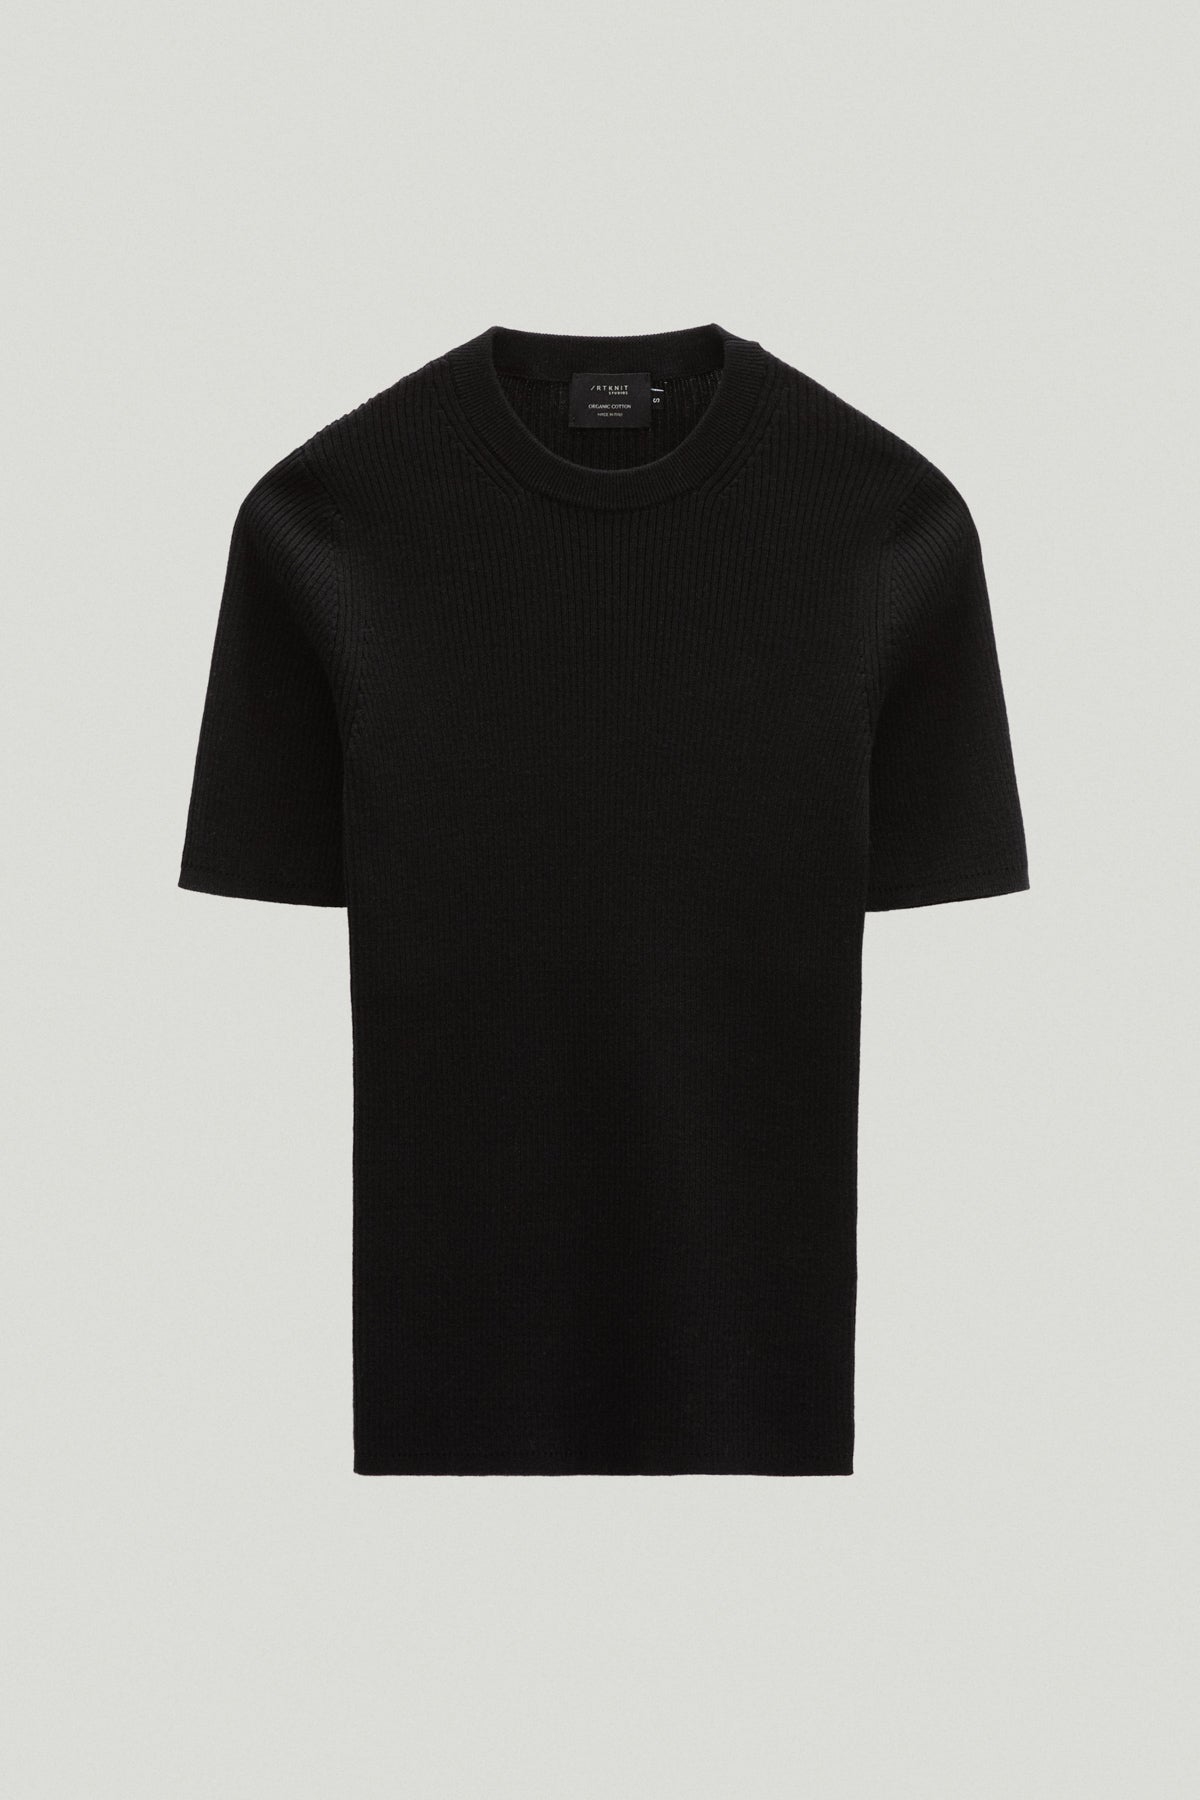 Black | The Organic Cotton Ribbed T-Shirt